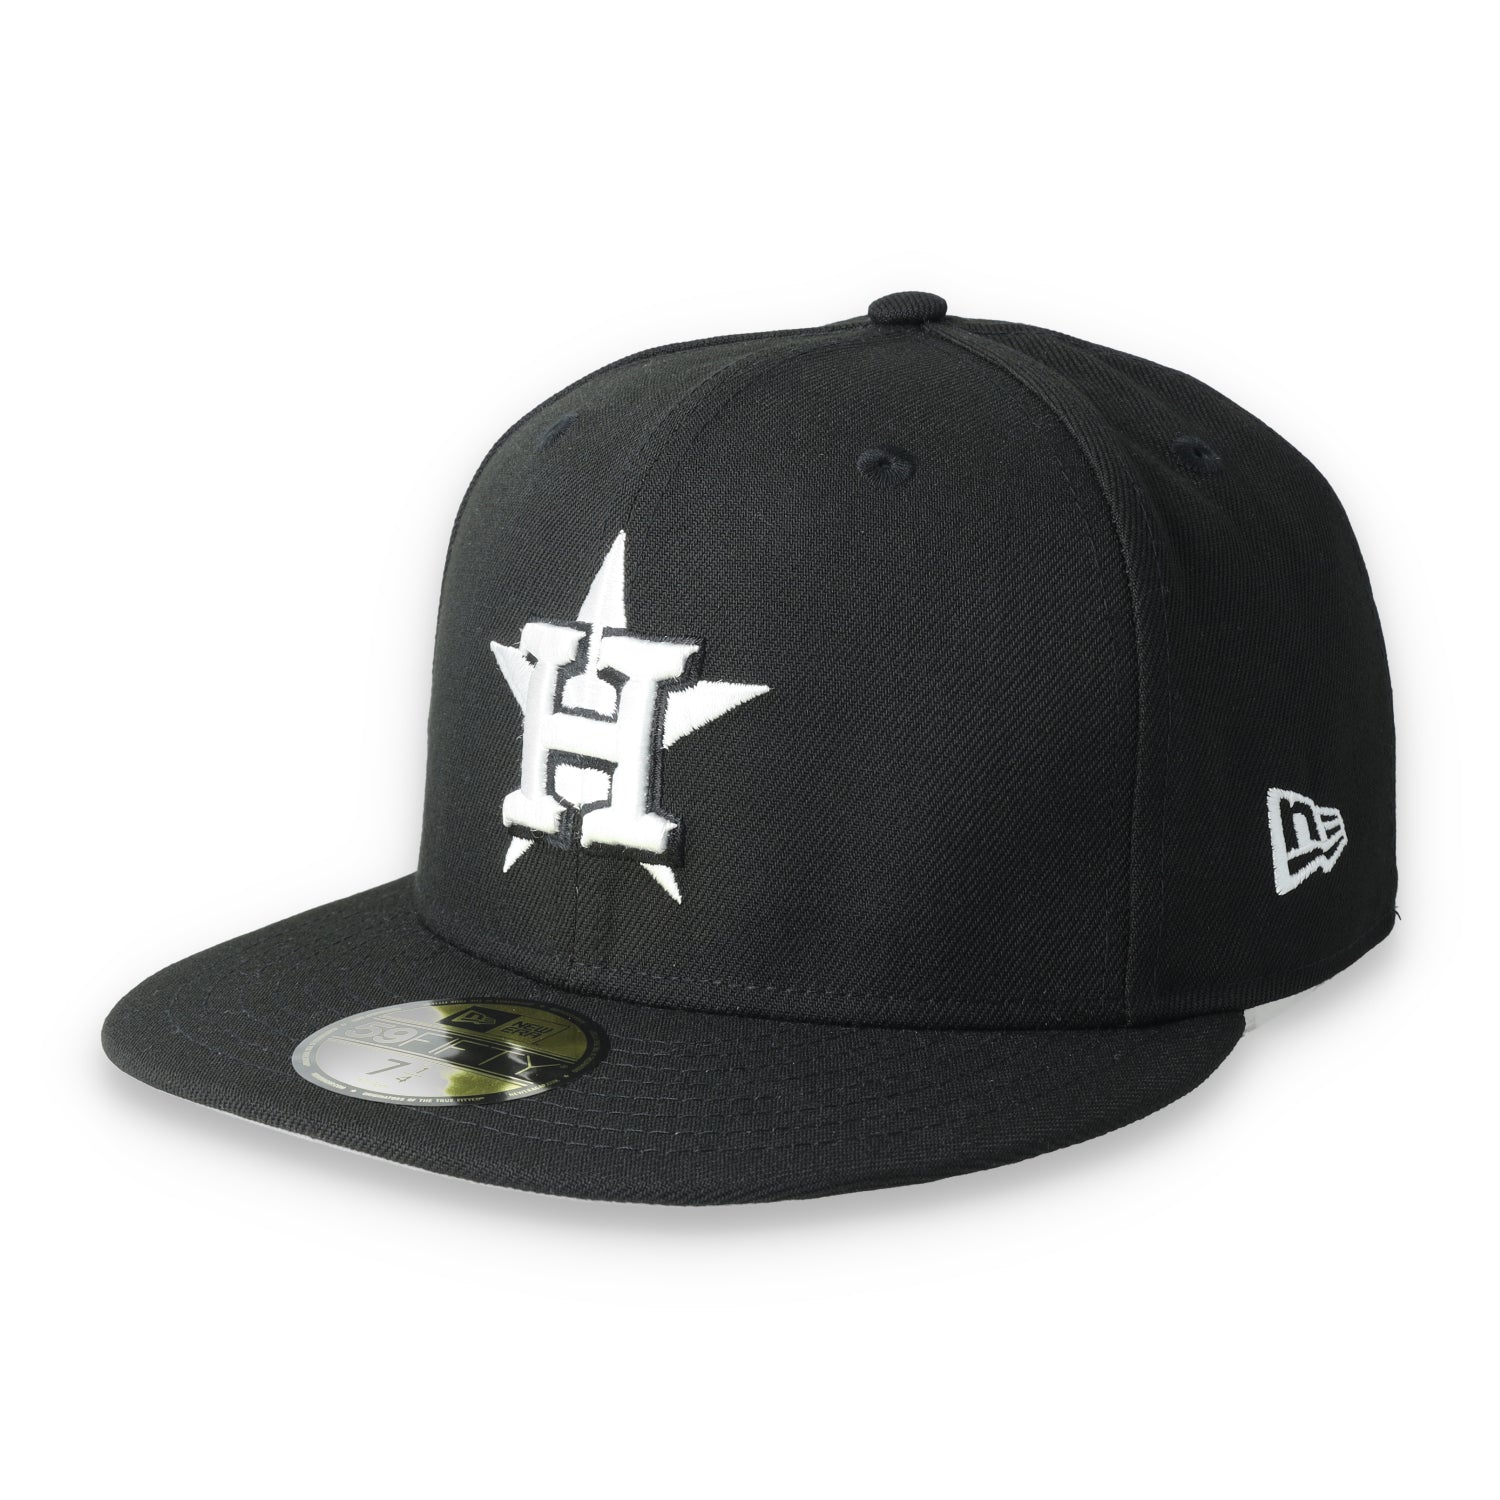 New Era Houston Astros Side Patch 2017 World Series 59FIFTY Hat-Black/White